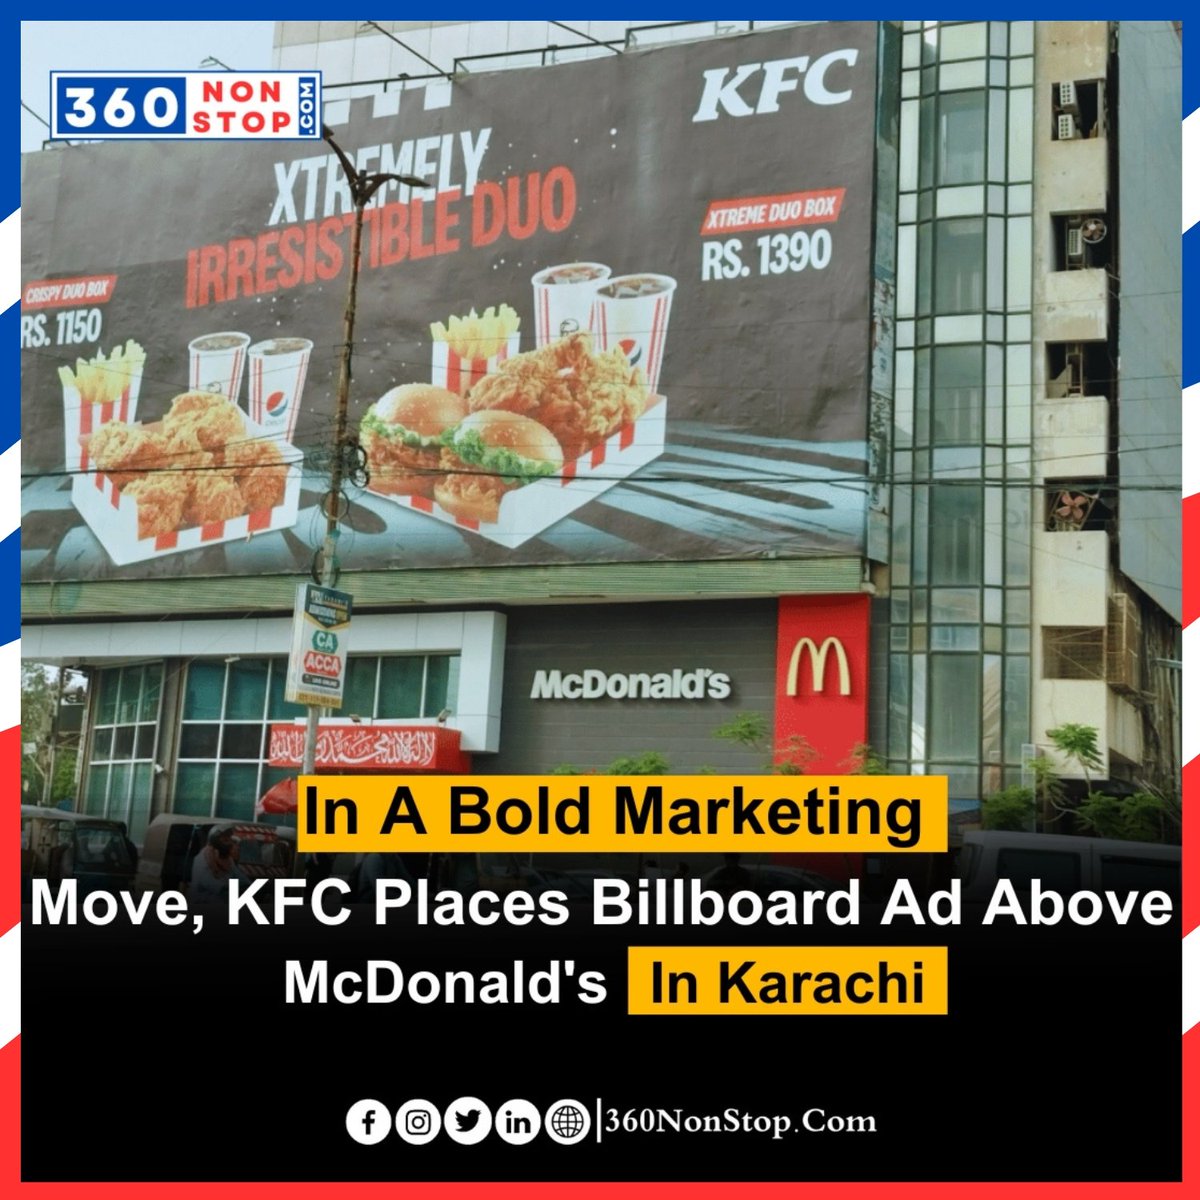 In A Bold Marketing Move, KFC Places Billboard Ad Above McDonald's In Karachi.

#KFC #McDonalds #BillboardAd #MarketingStrategy #BoldMove #BrandCompetition #AdvertisingTactic #Out-of-the-box #BrandWar #Karachi #BrandVisibility #Billboard #CompetitiveMarketing #360NonStop